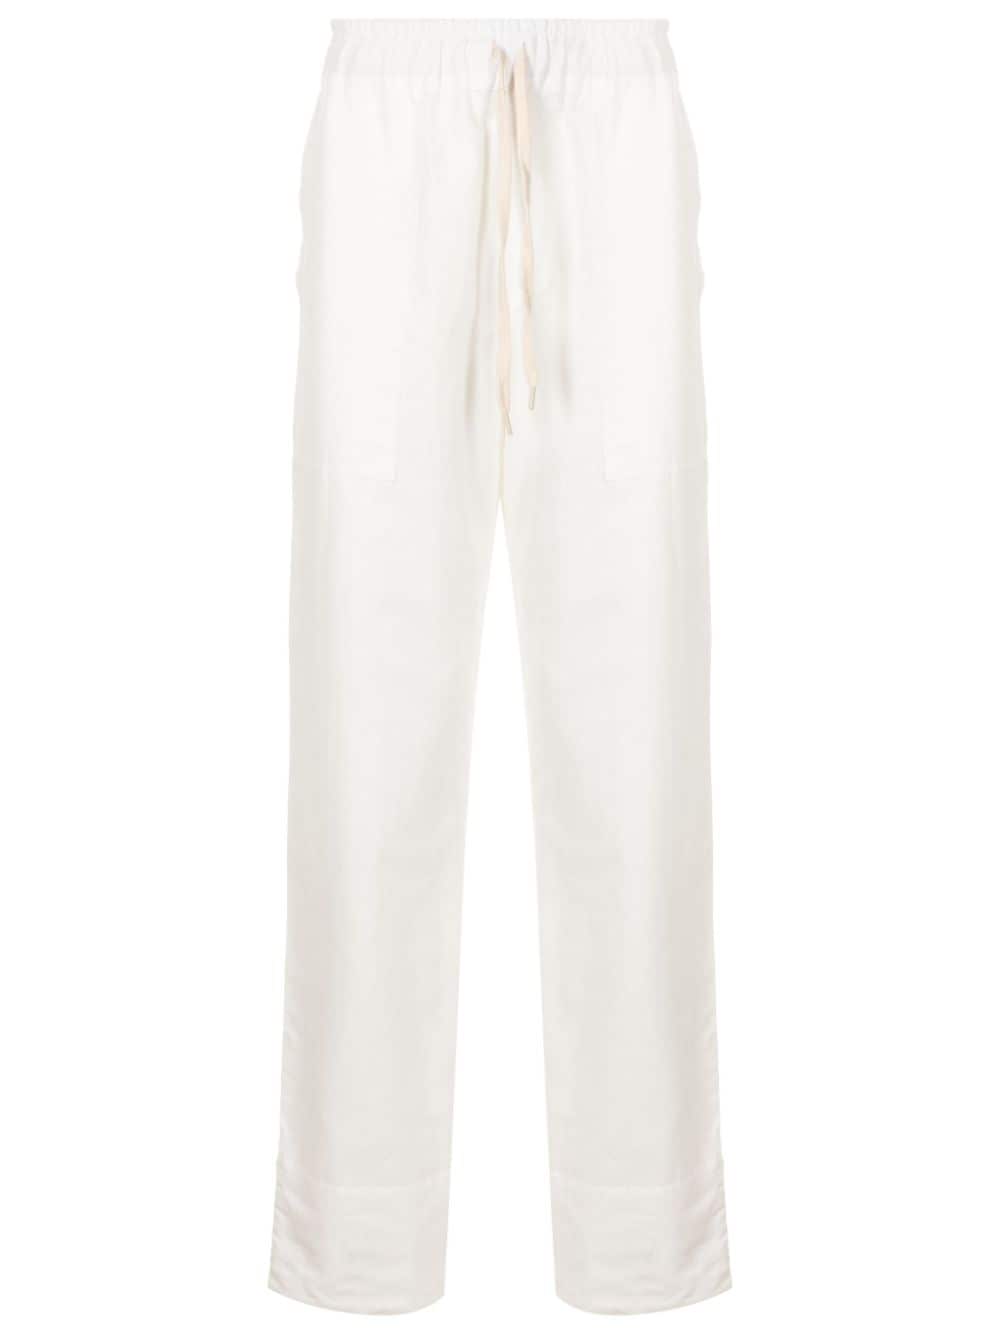 Uma | Raquel Davidowicz Pumpkin straight-leg trousers - White von Uma | Raquel Davidowicz